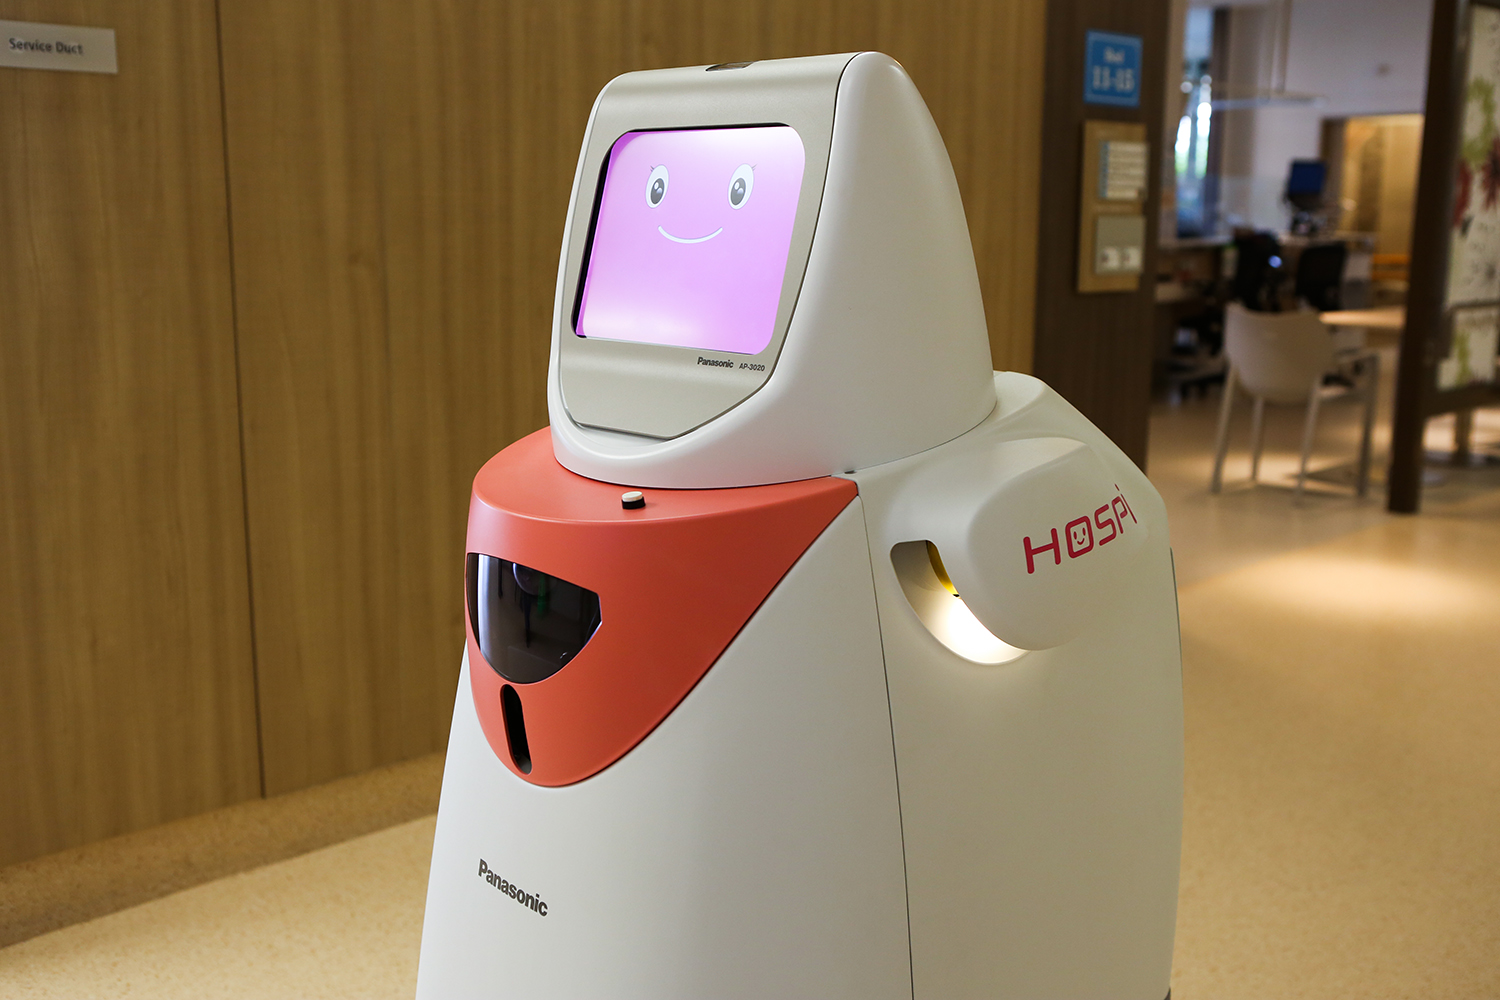 Panasonic Autonomous Robots - HOSPI - Aid Hospital Operations at Changi General Hospital | Business Solutions | Products Solutions | Blog Posts | Panasonic Newsroom Global